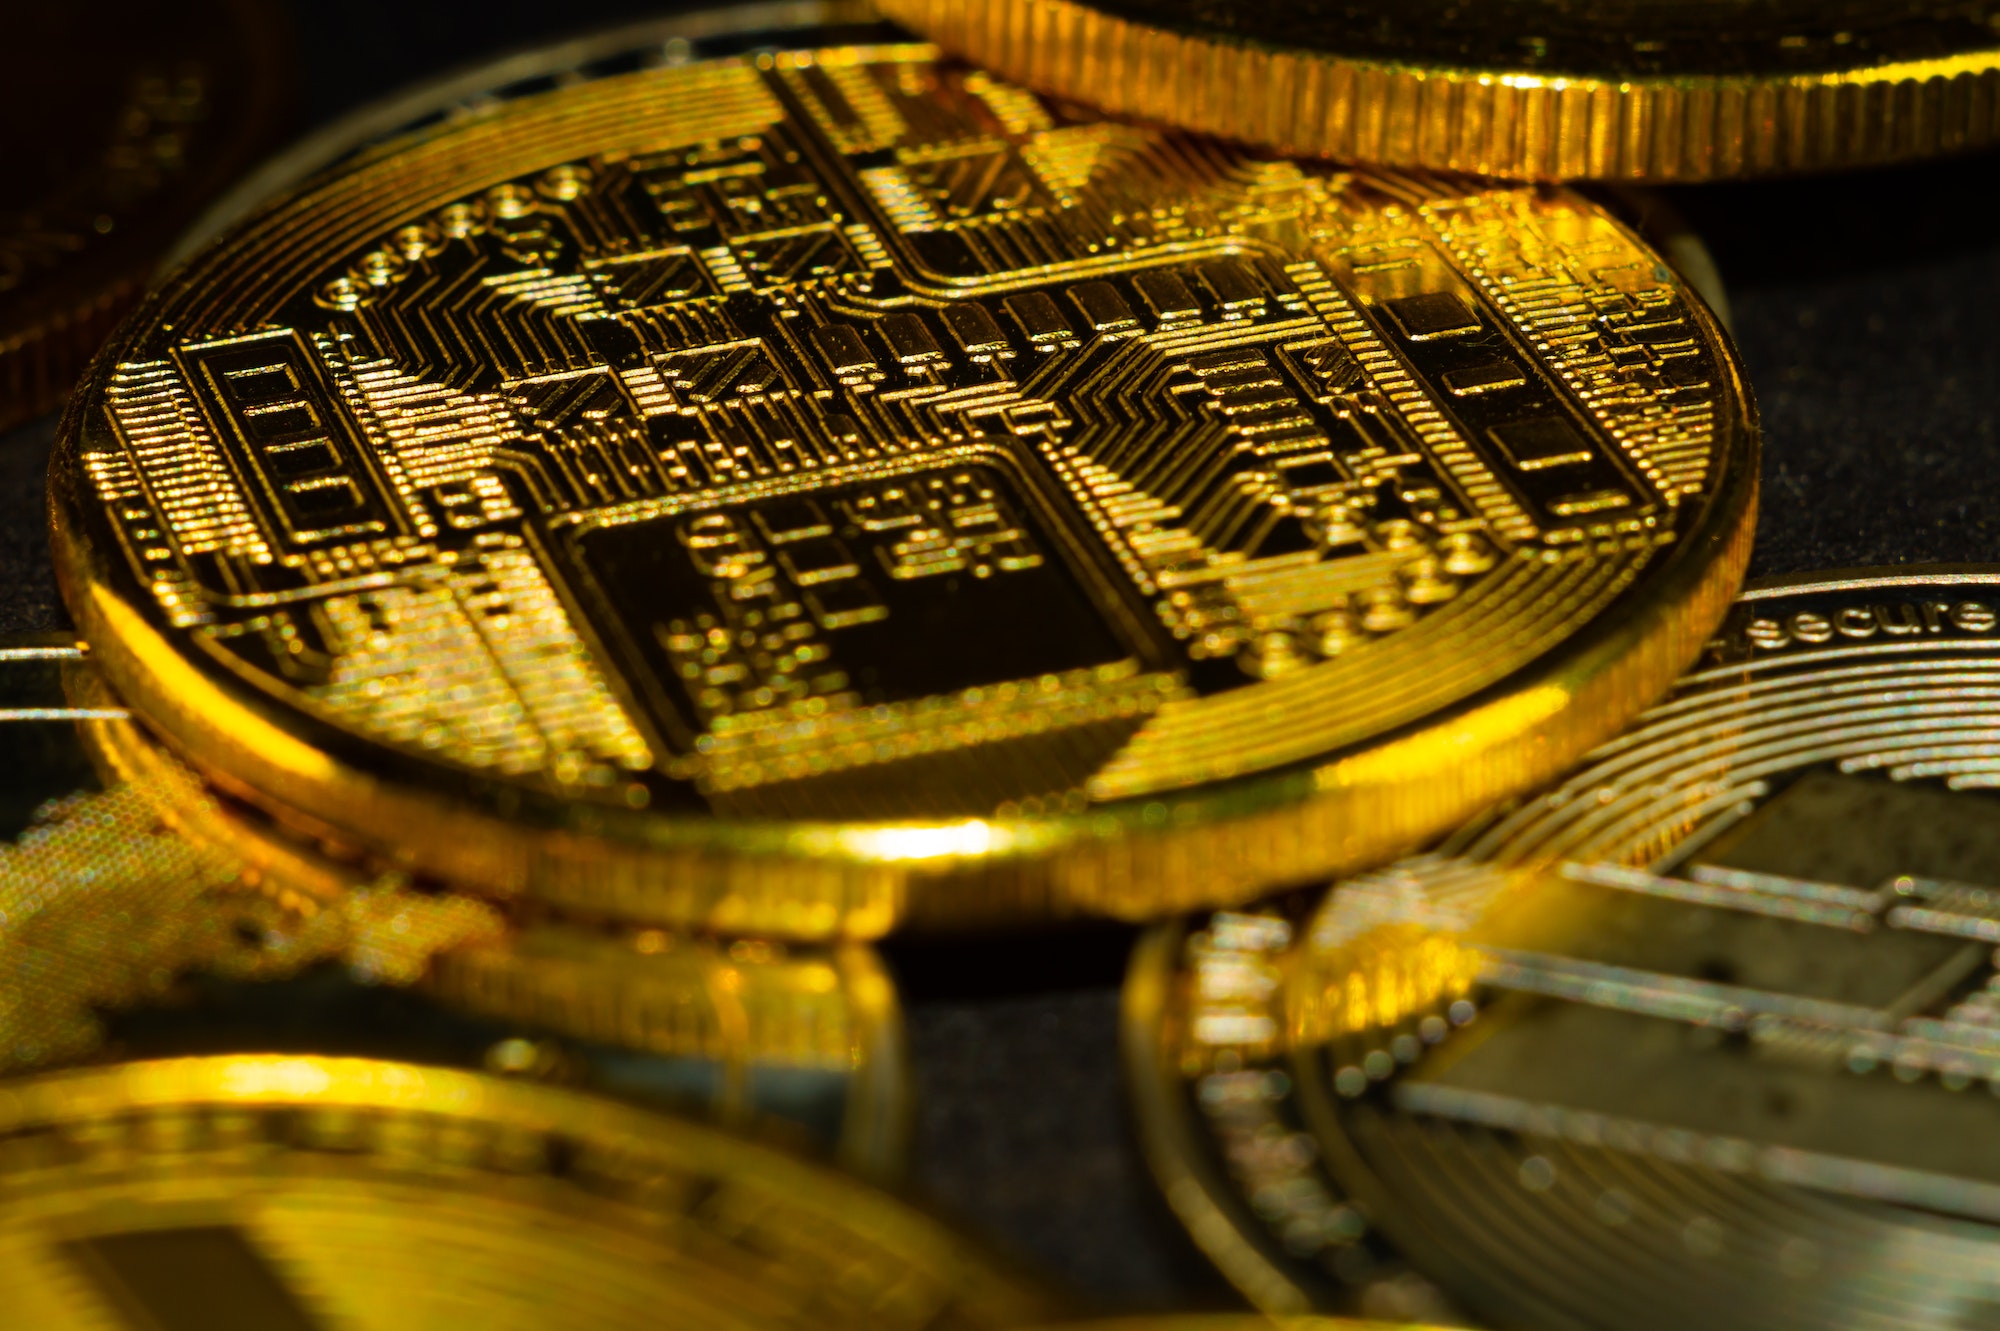 Closeup shot of bitcoins. Digital currency.